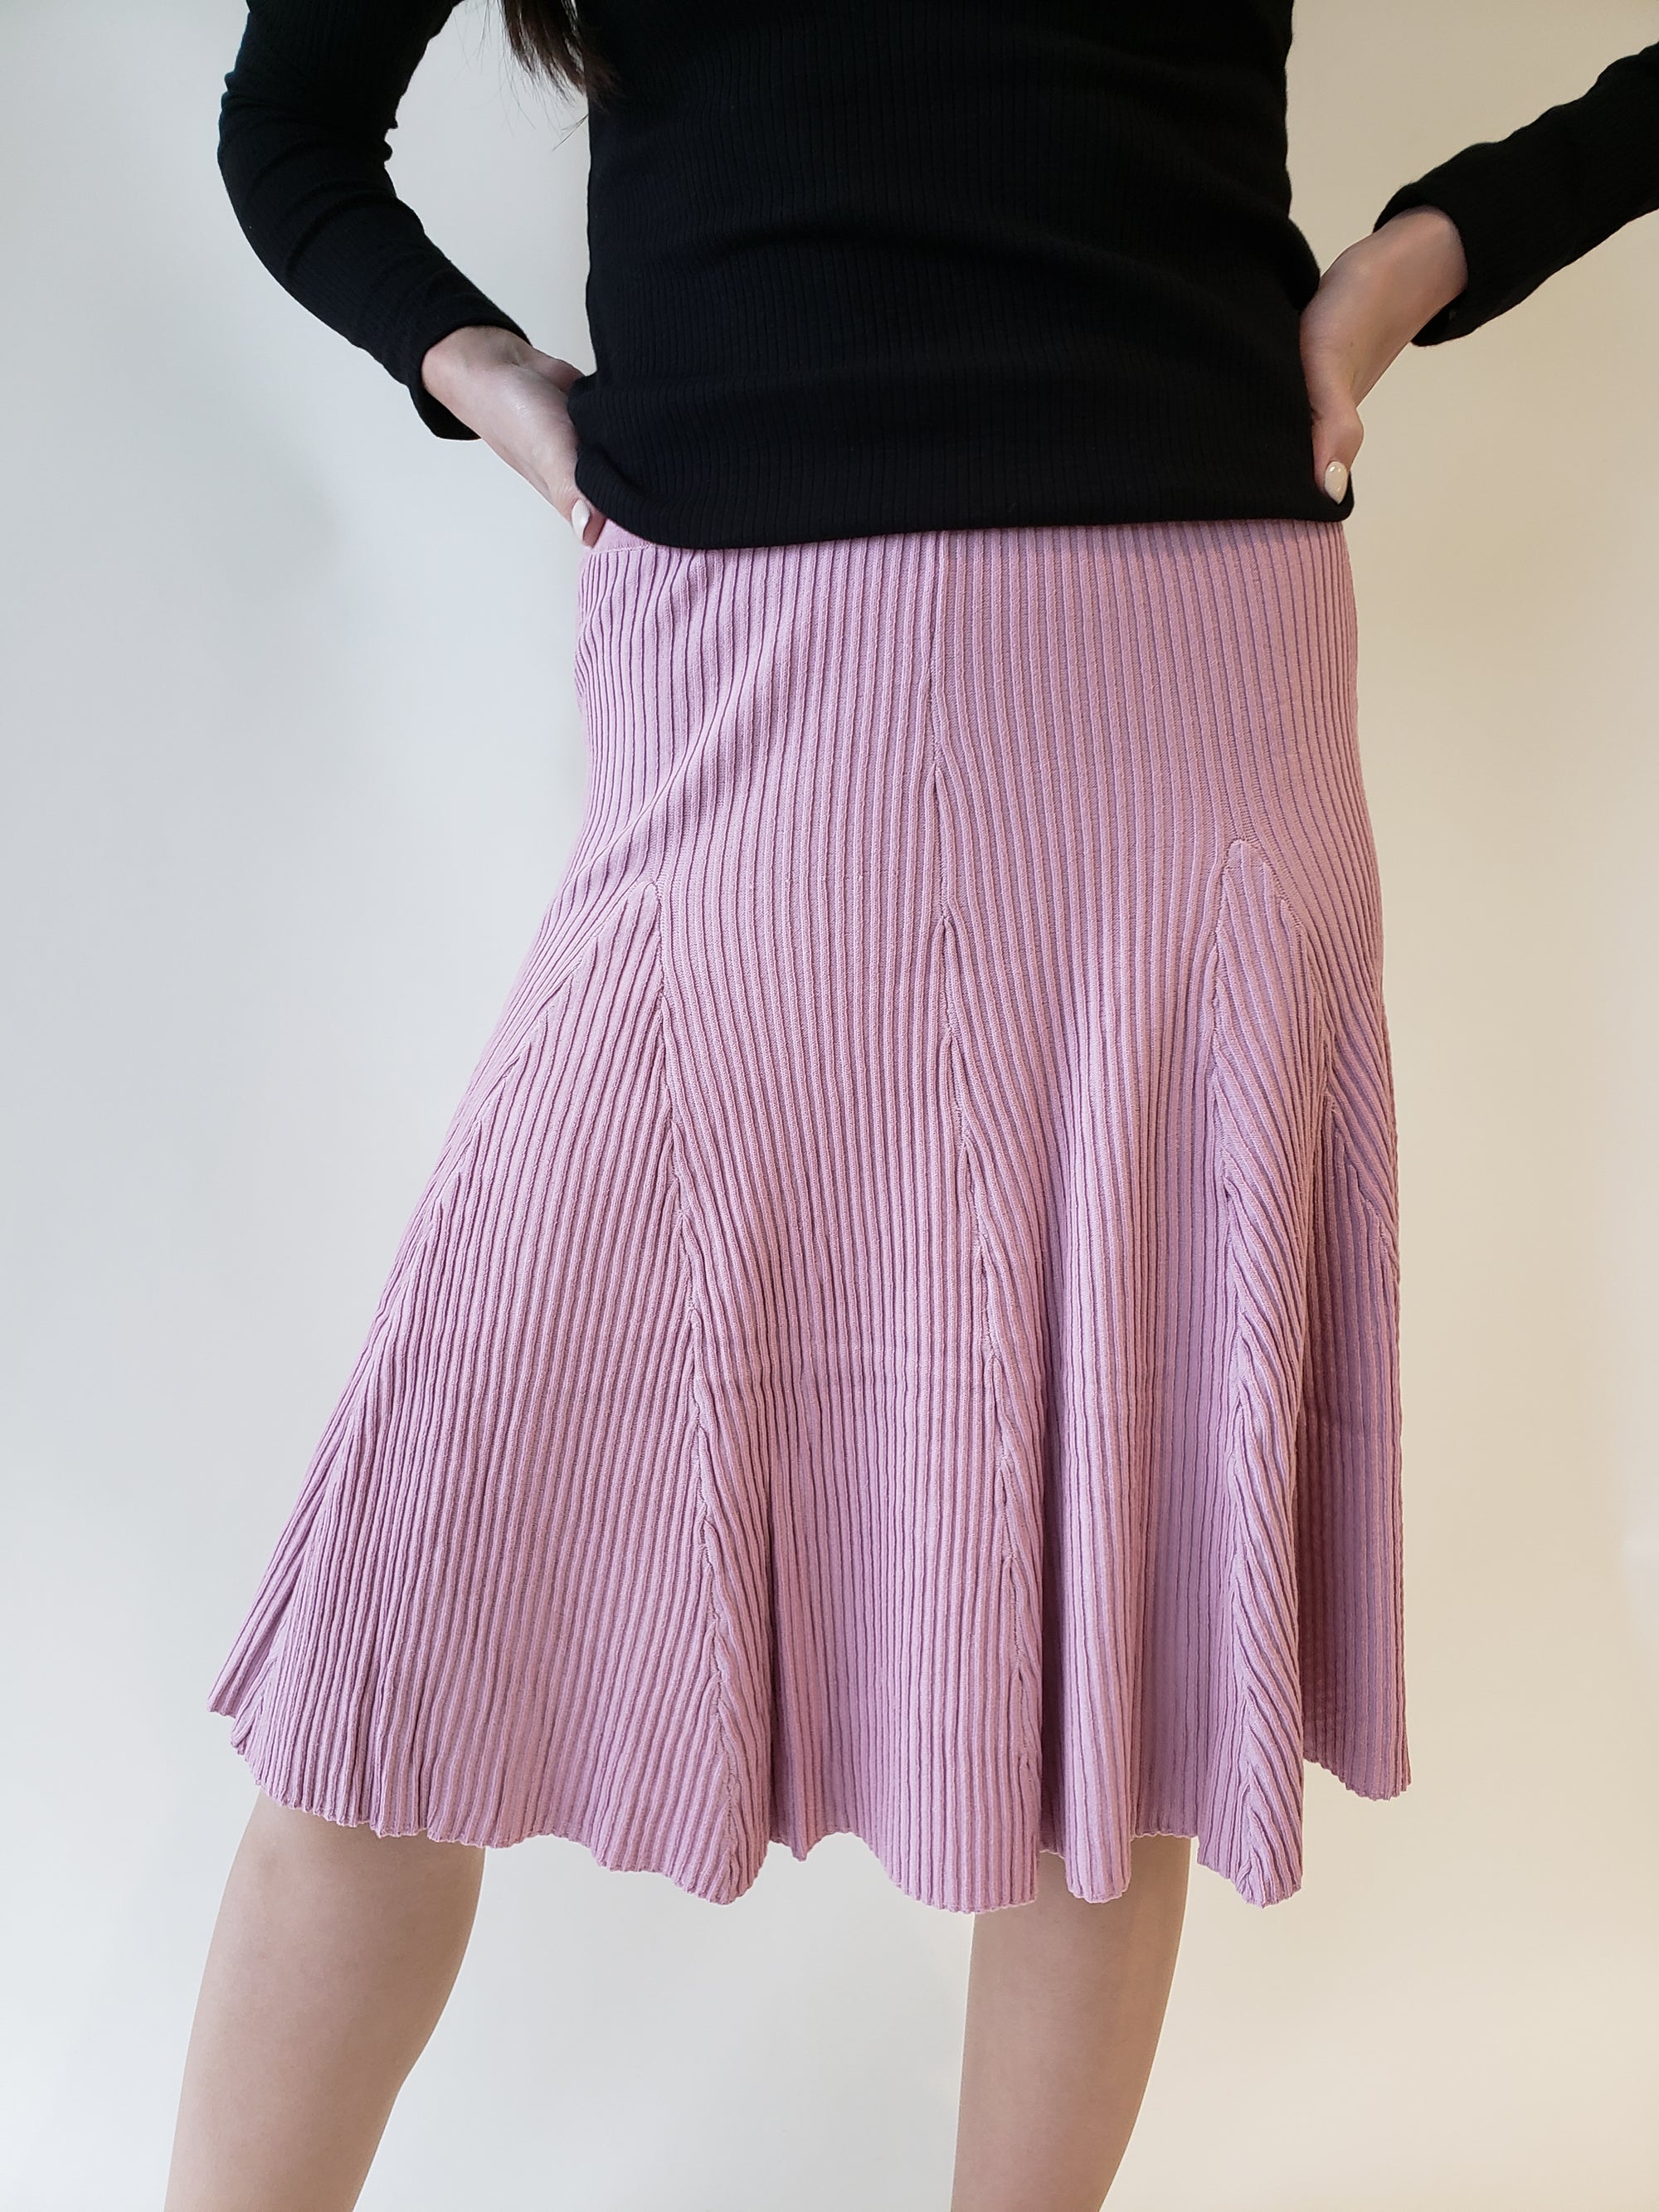 Kerisma Miori Knee Skirt-Skirt-Mementos